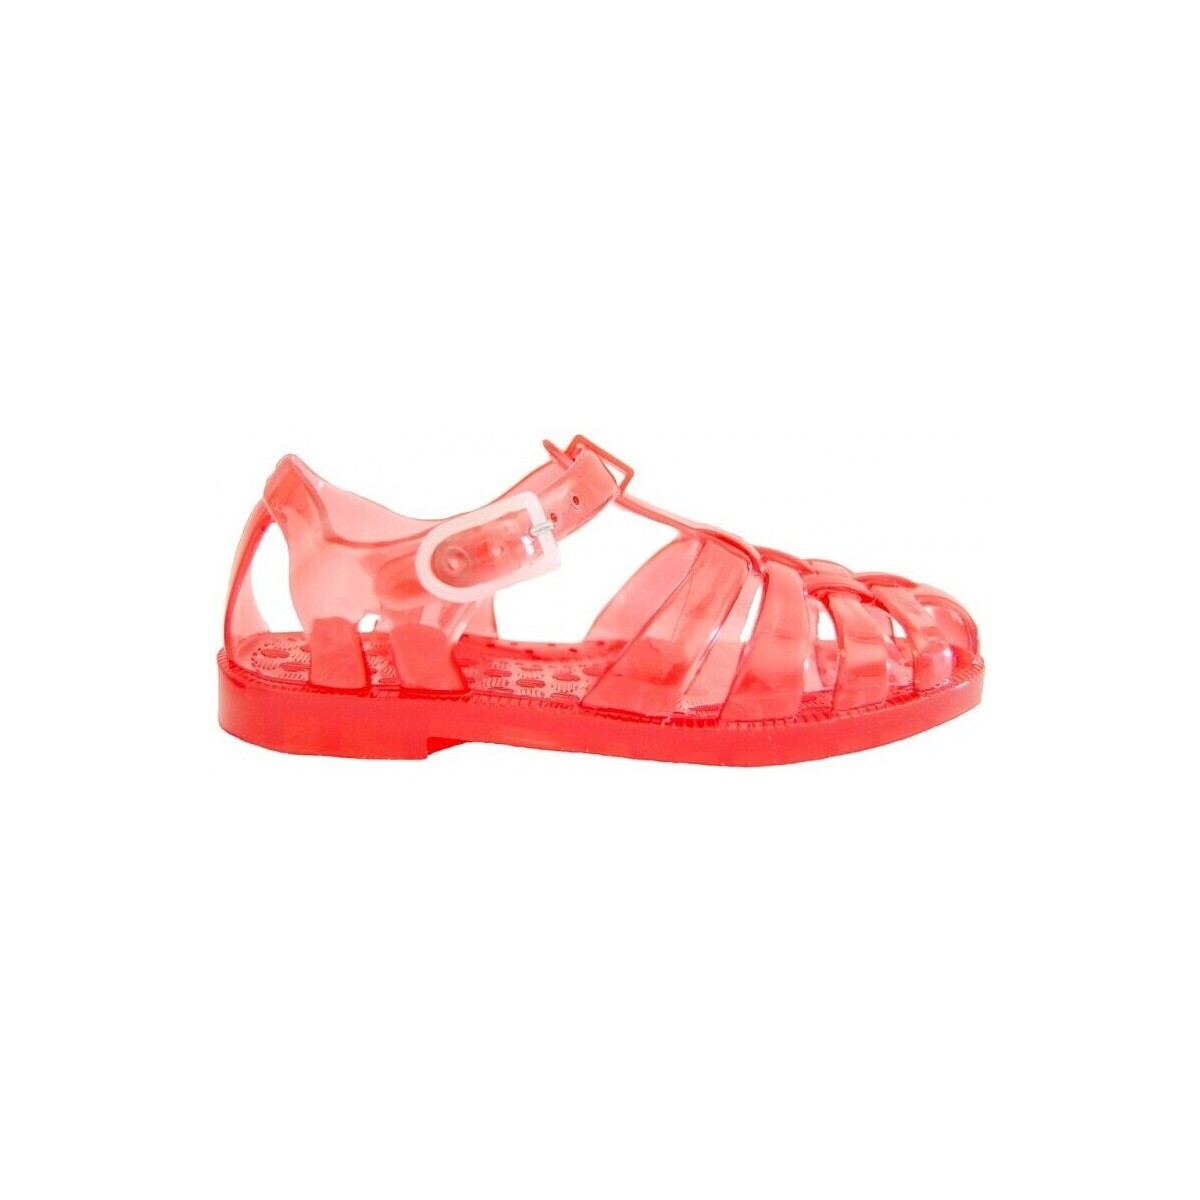 Cipők strandpapucsok Colores 9330-18 Piros